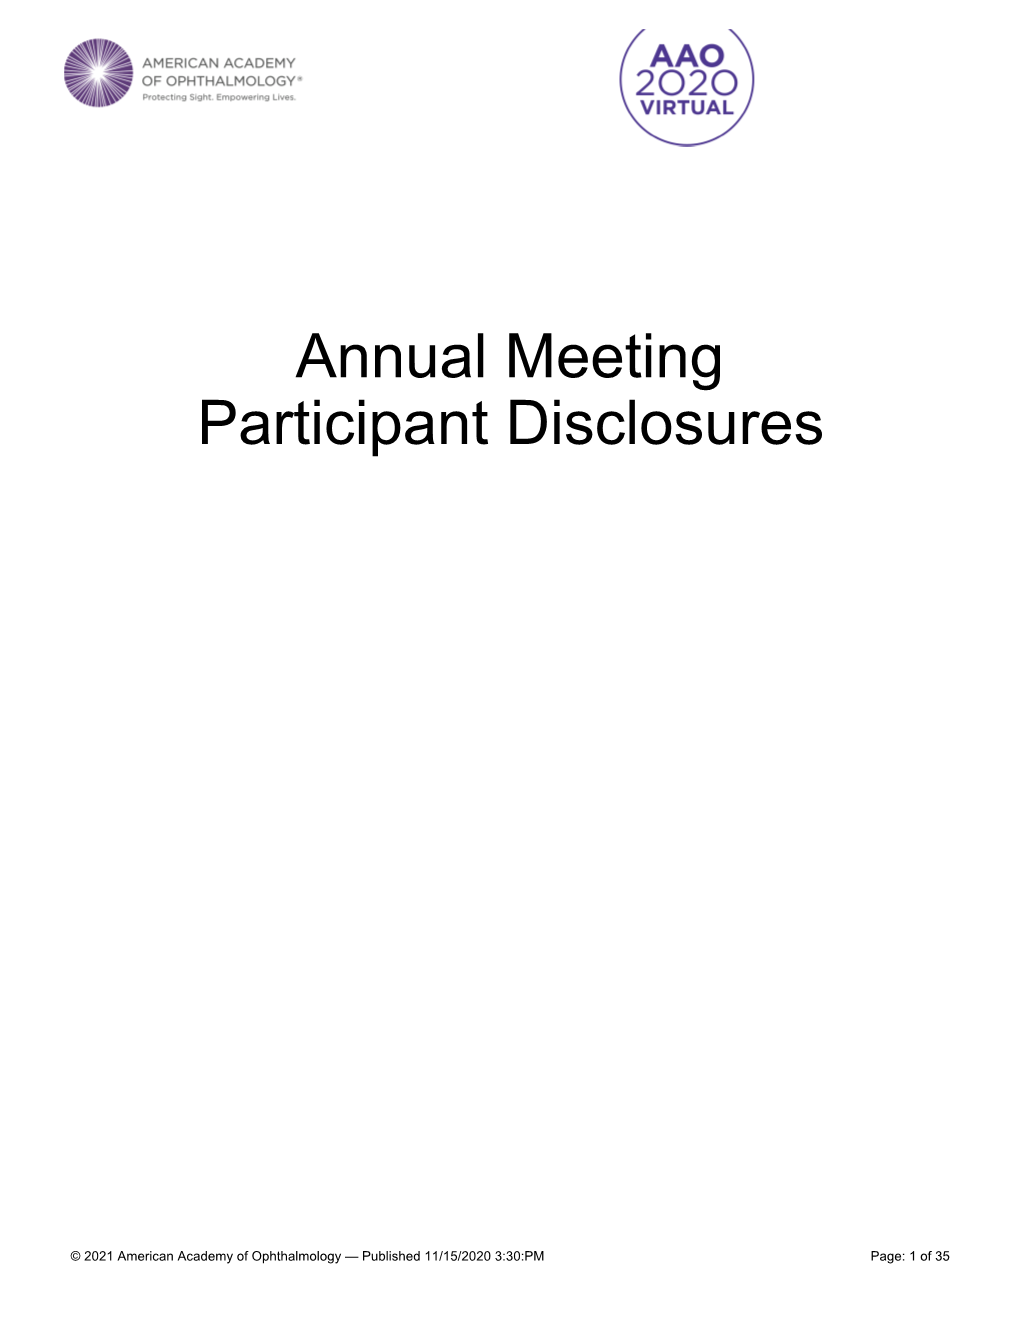 Presenter Financial Disclosures for AAO 2020